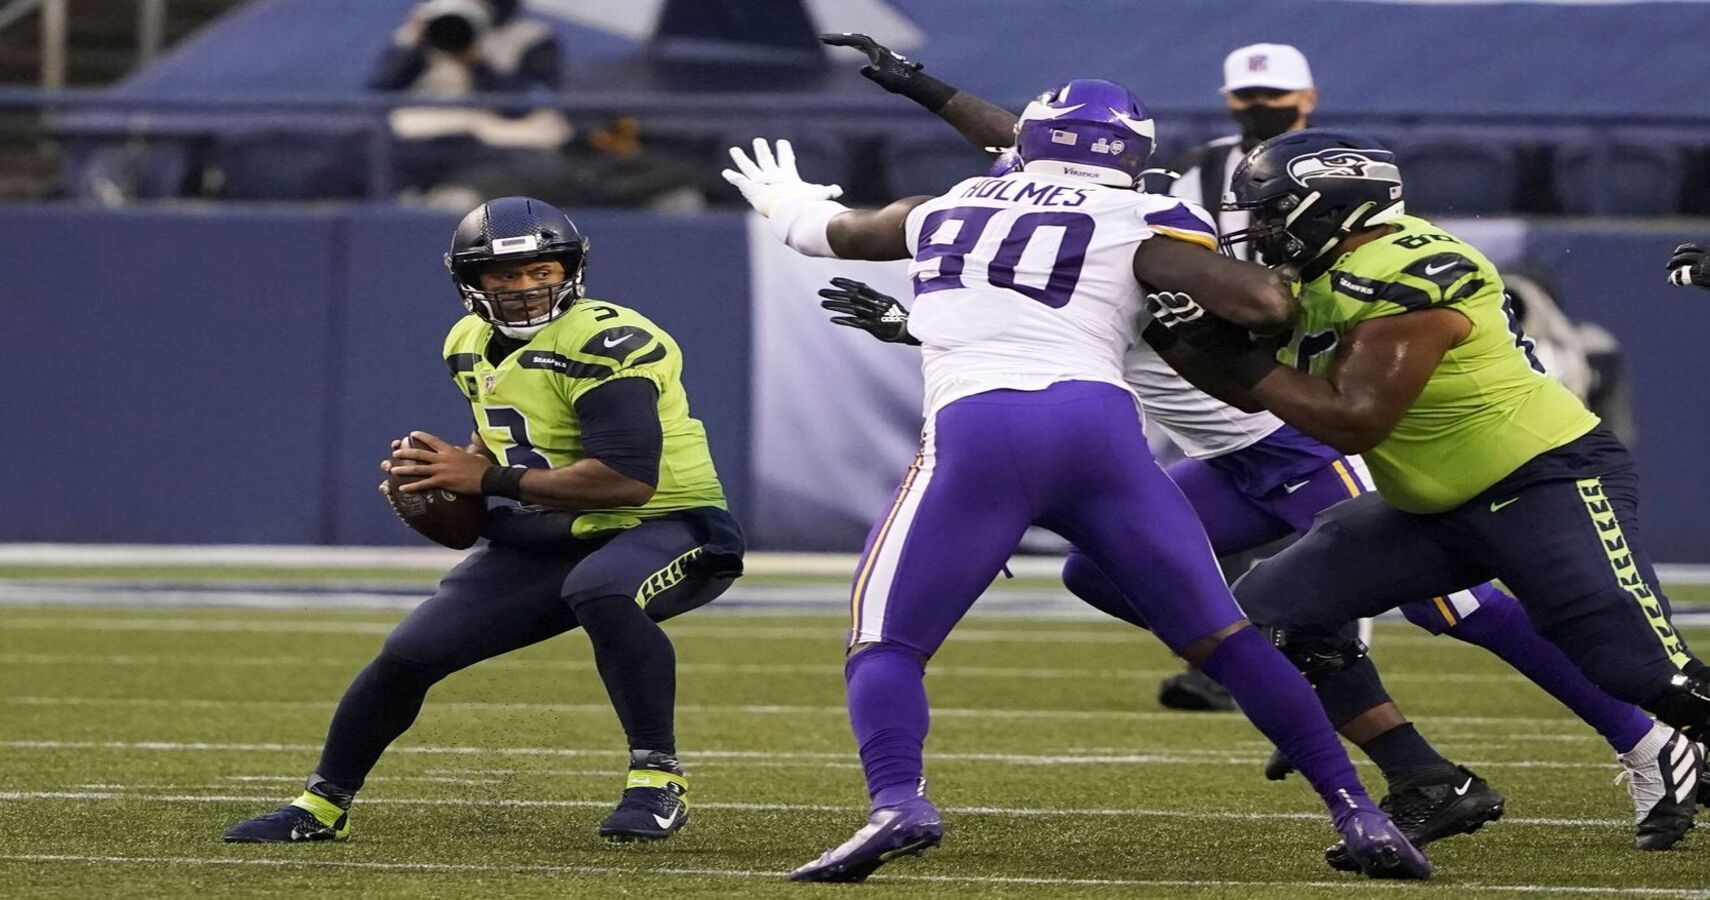 Vikings-Seahawks Week 5 "Sunday Night Football" Game Drew 11.42 Million Viewers